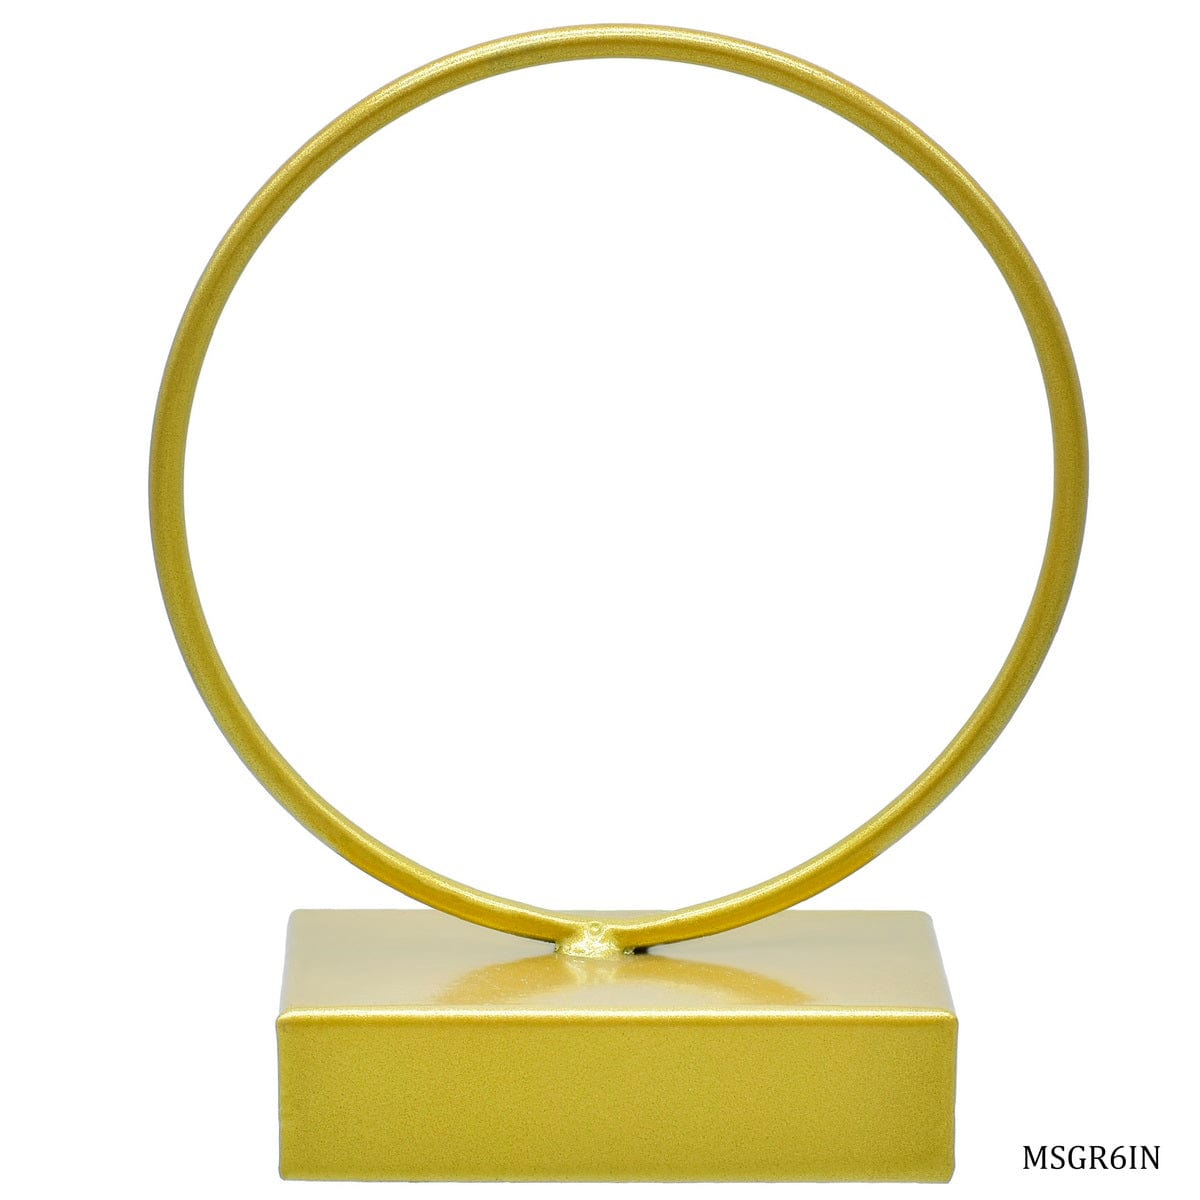 jags-mumbai Easel Elegant Gold Round Metal Stand - 6 Inch Diameter, Contain 1 Unit